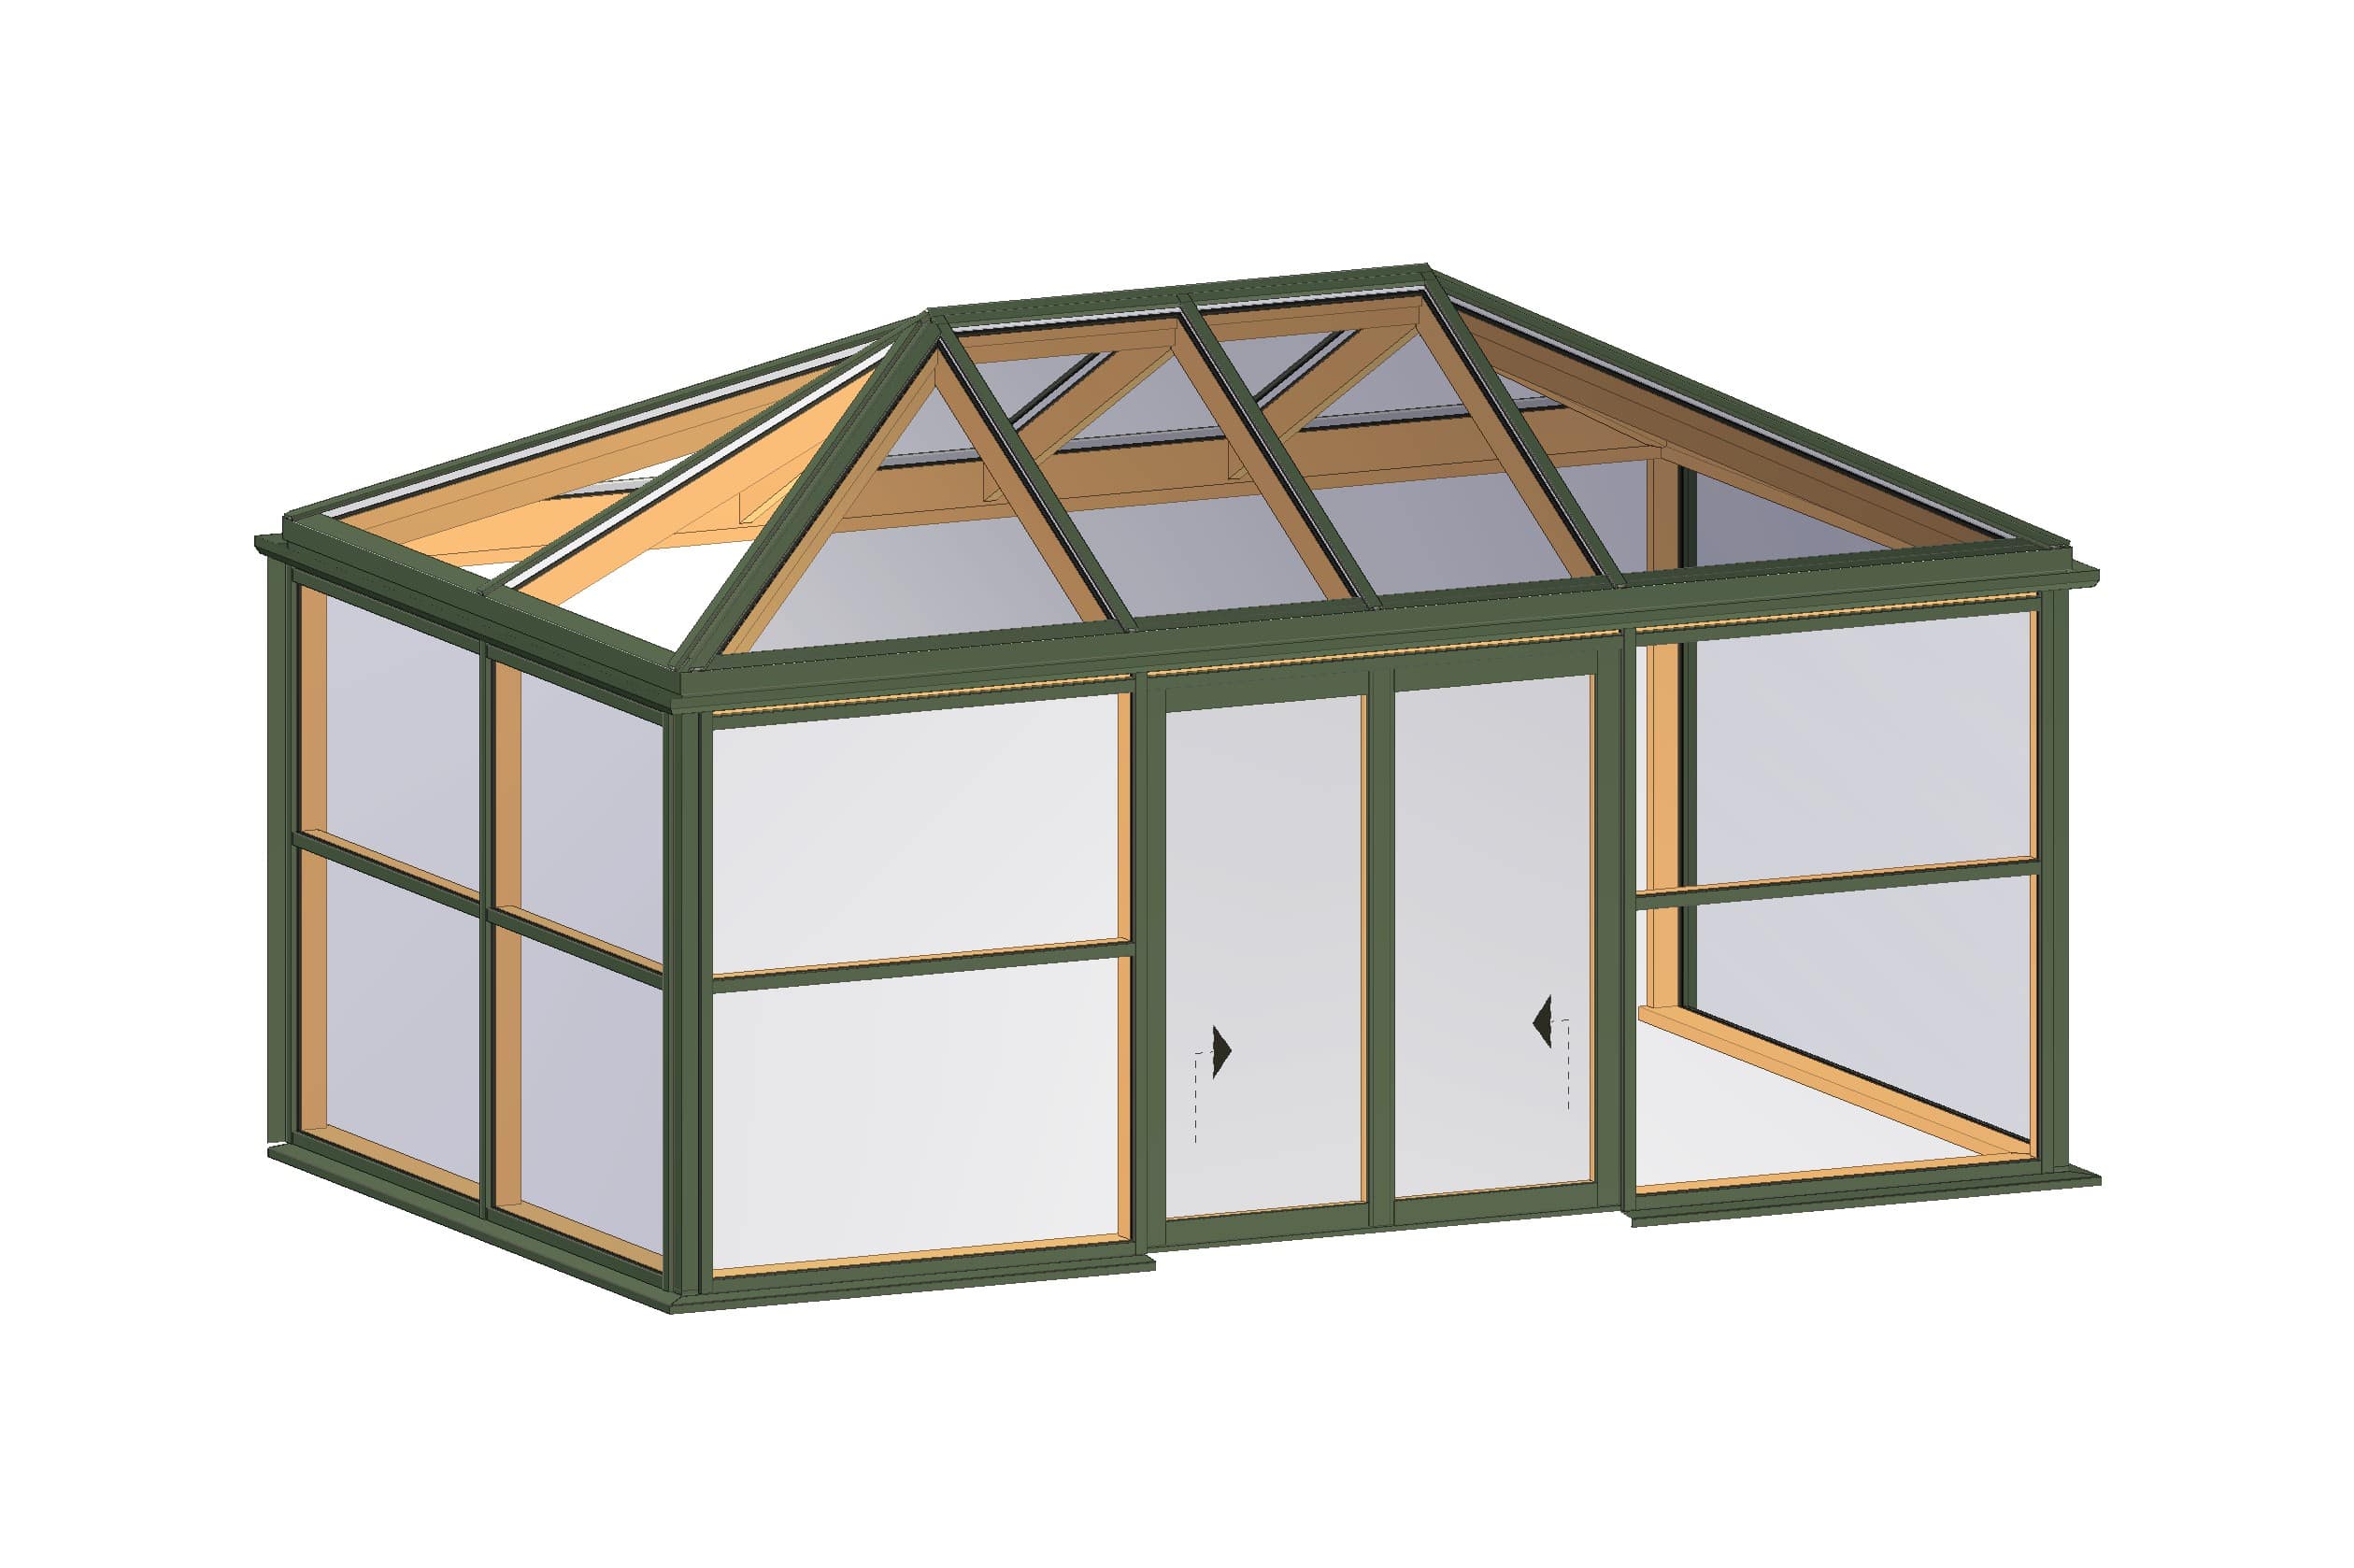 Klaes 3D conservatory - construction and photo view